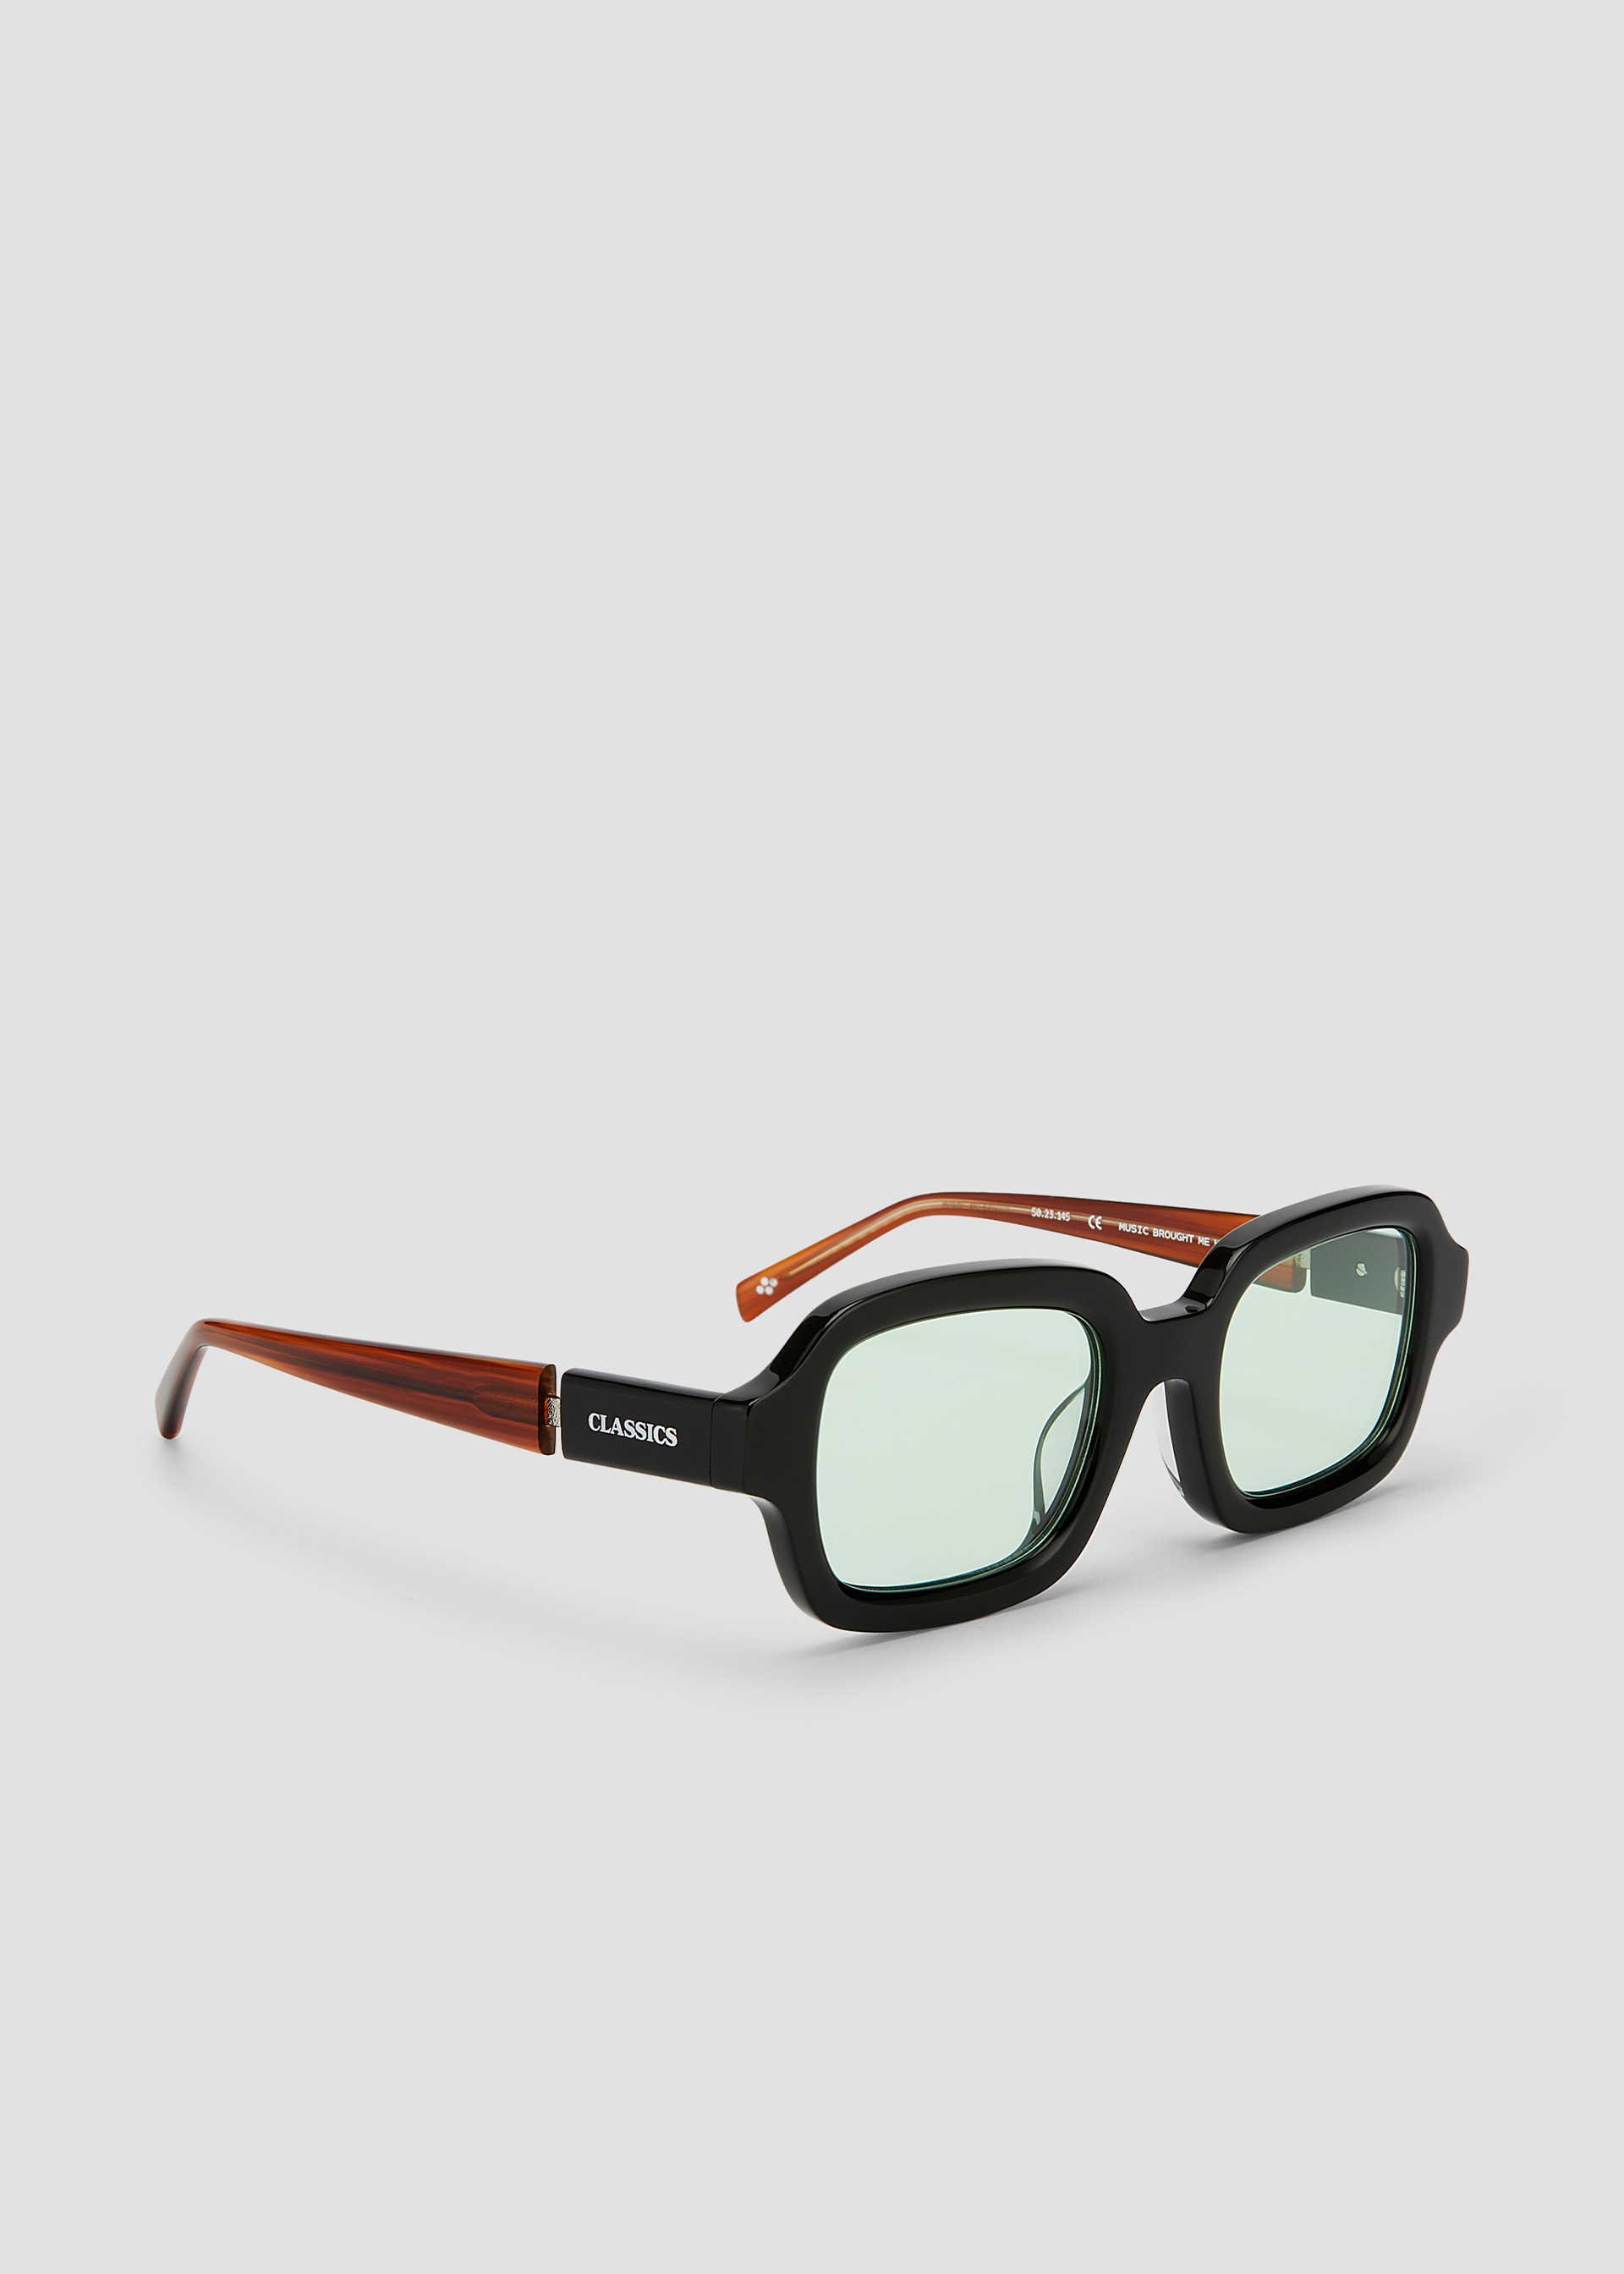 Monogram Light Cat Eye Bonnie Clyde Sunglasses Z1657 Iconic Design